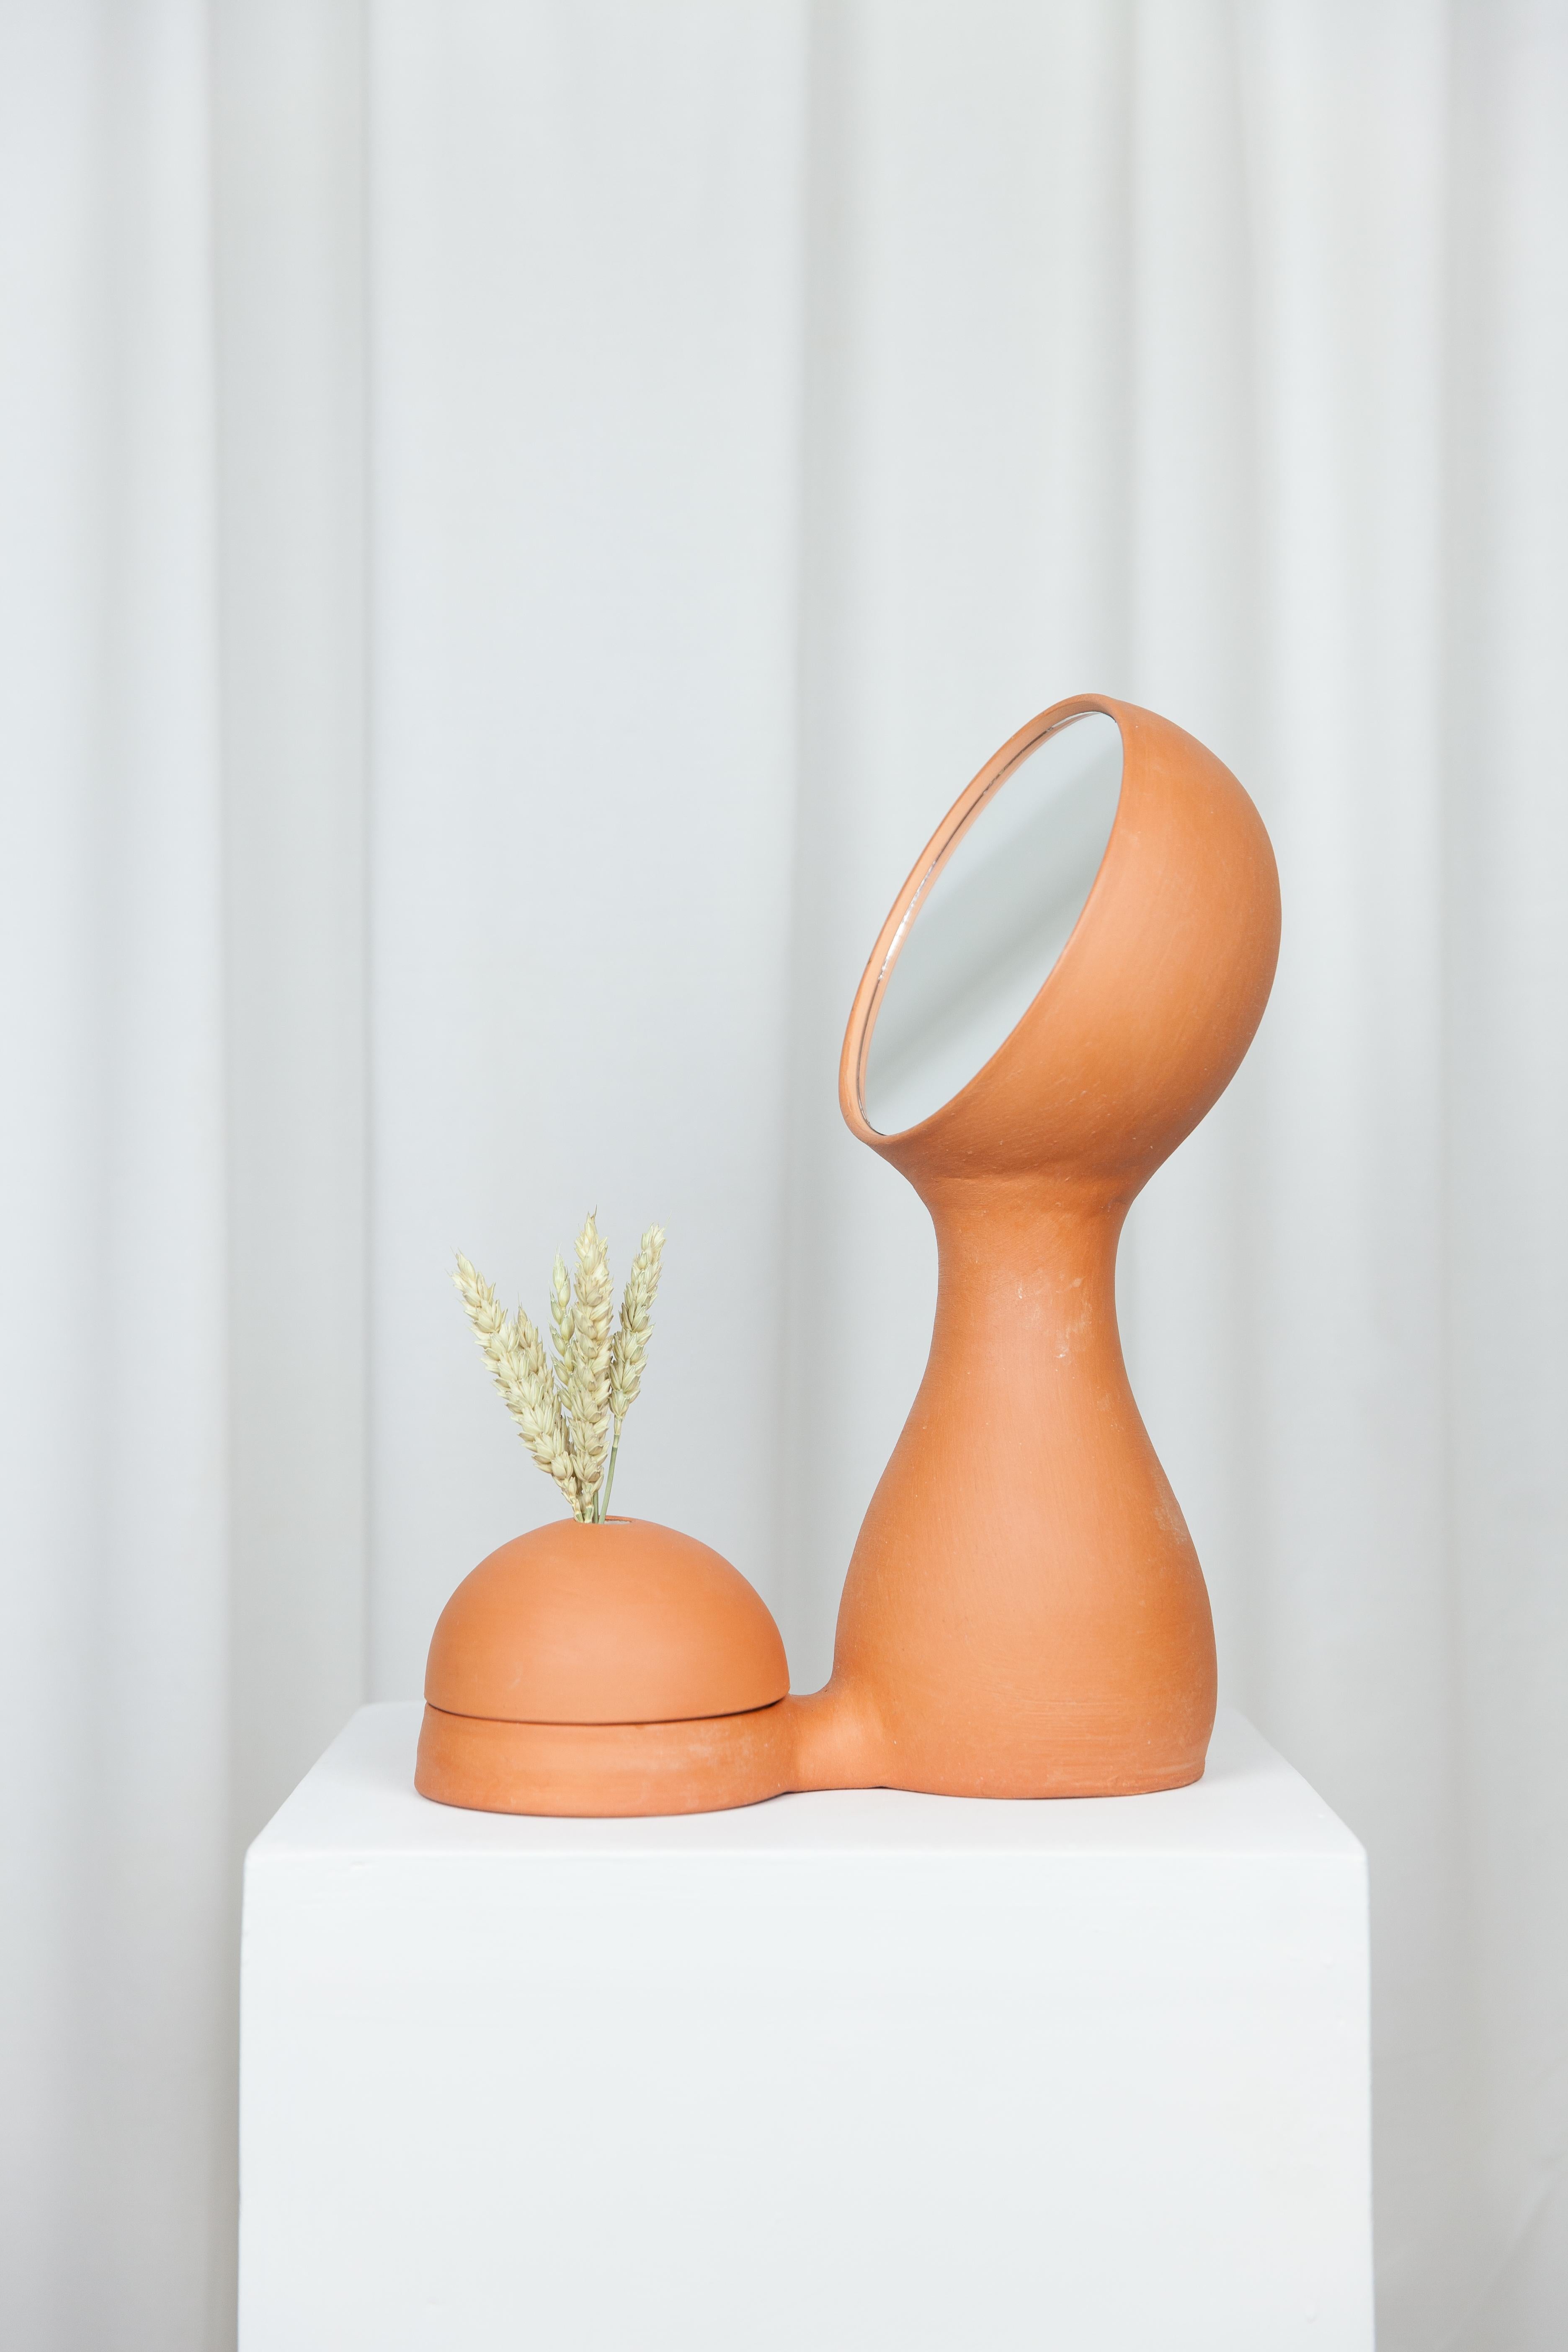 Post-Modern Wit Mirror + Vase Terracotta by Lola Mayeras